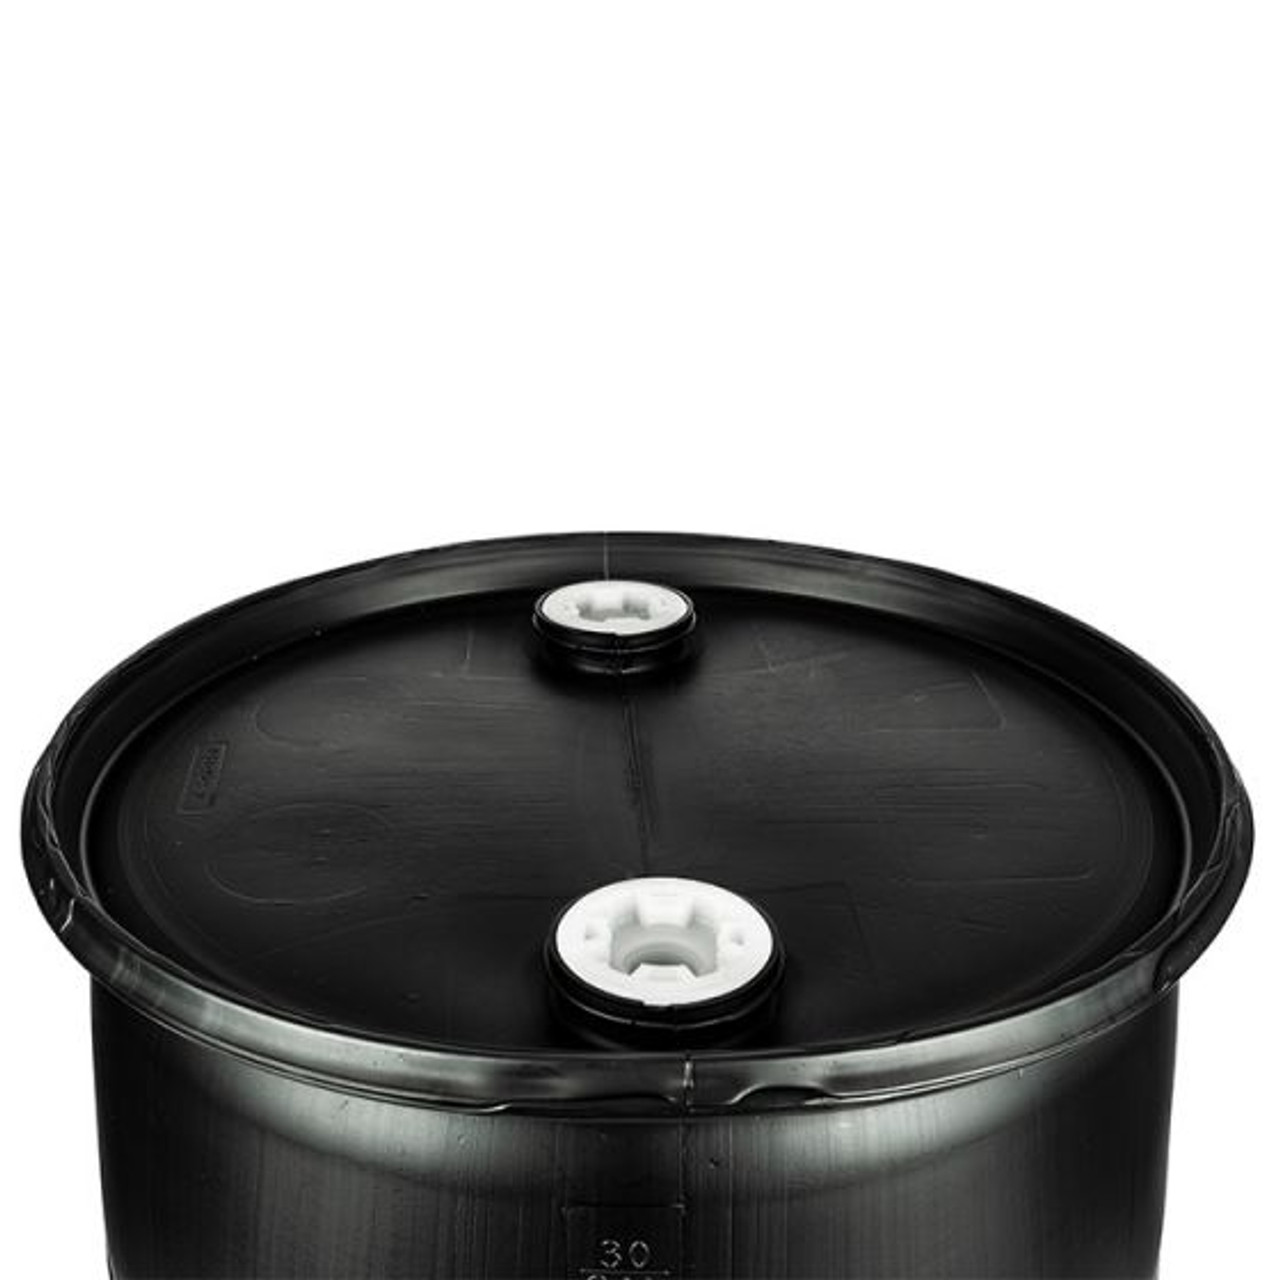 30 Gallon Closed Head Plastic Drum, UN Rated, Fittings - Black